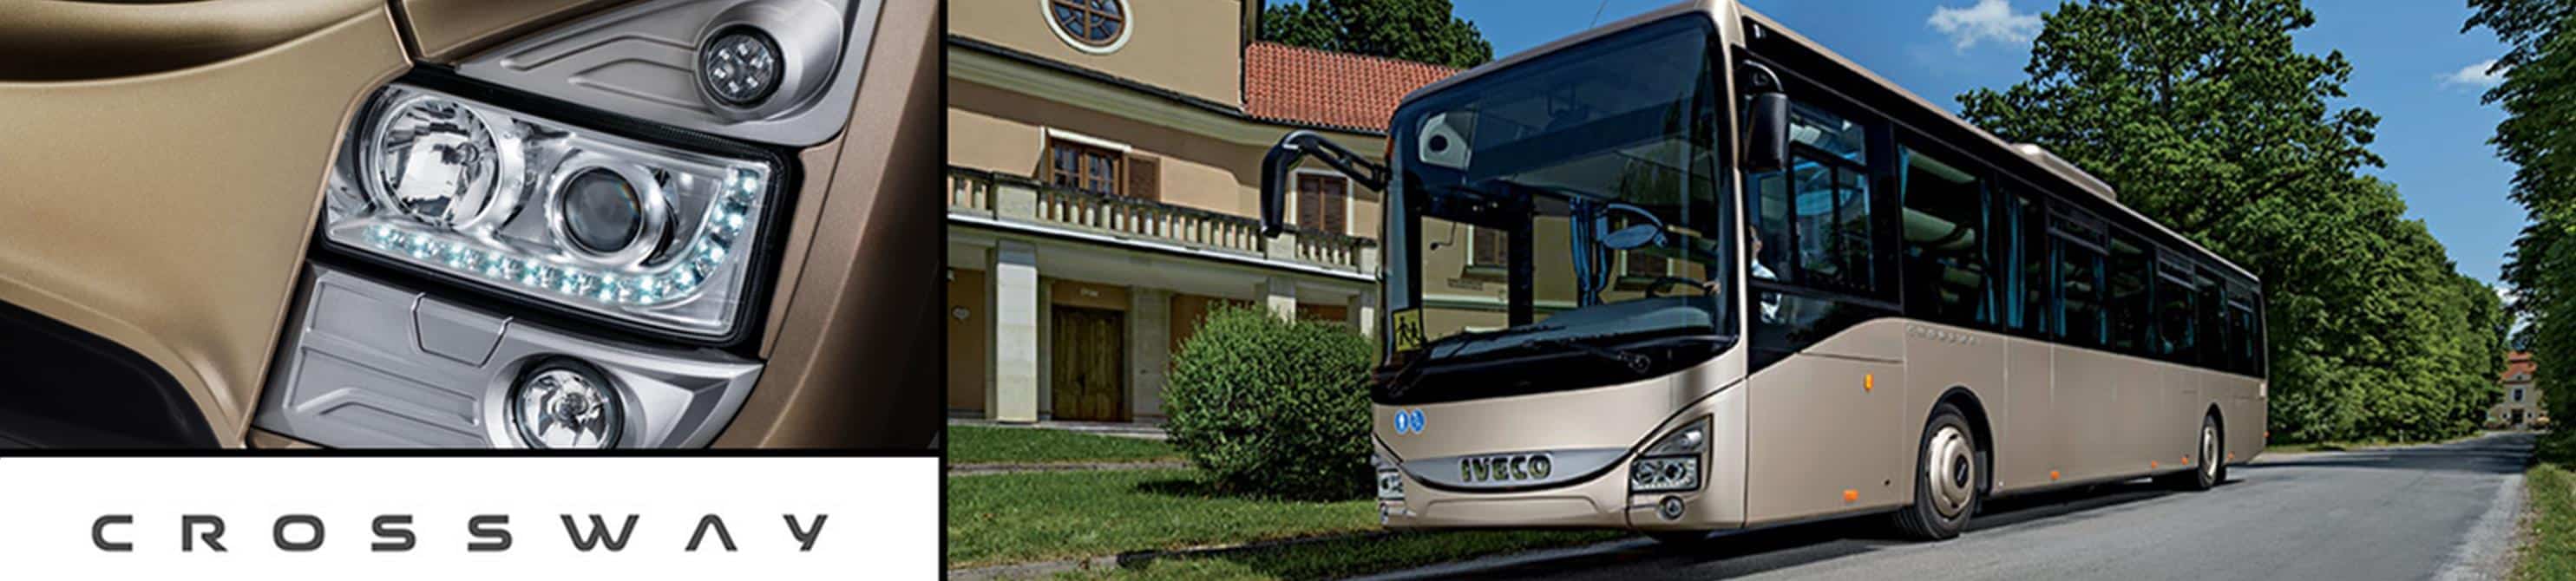 Concessionaria Iveco Orecchia bus